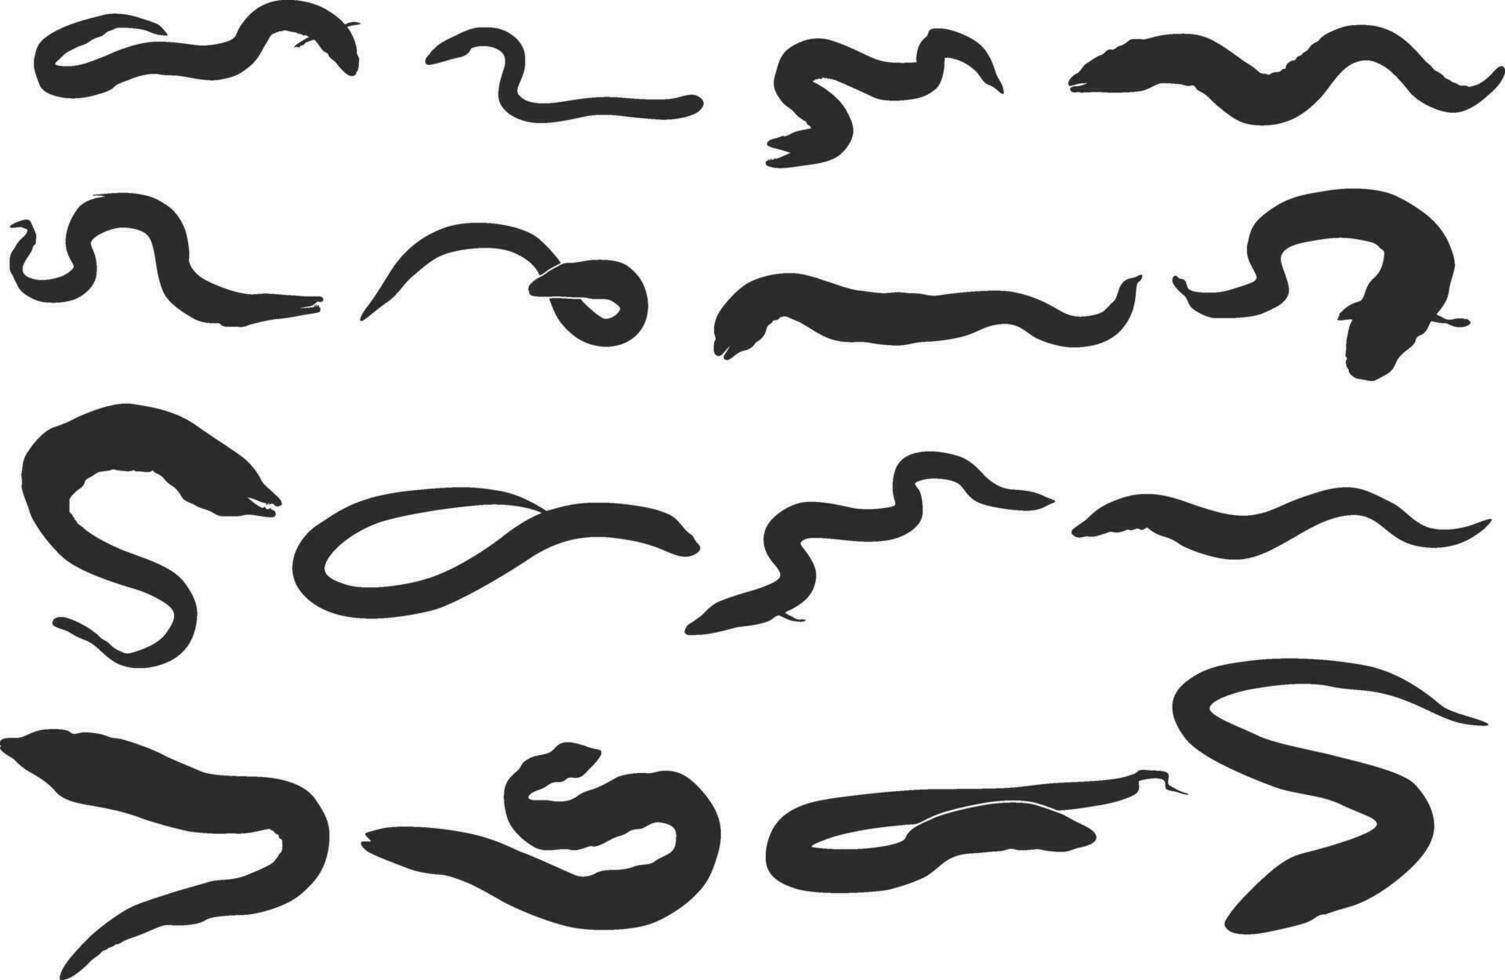 Eel fish silhouette, Moray eel fish silhouette, European eel silhouette, Eel fish vector. vector